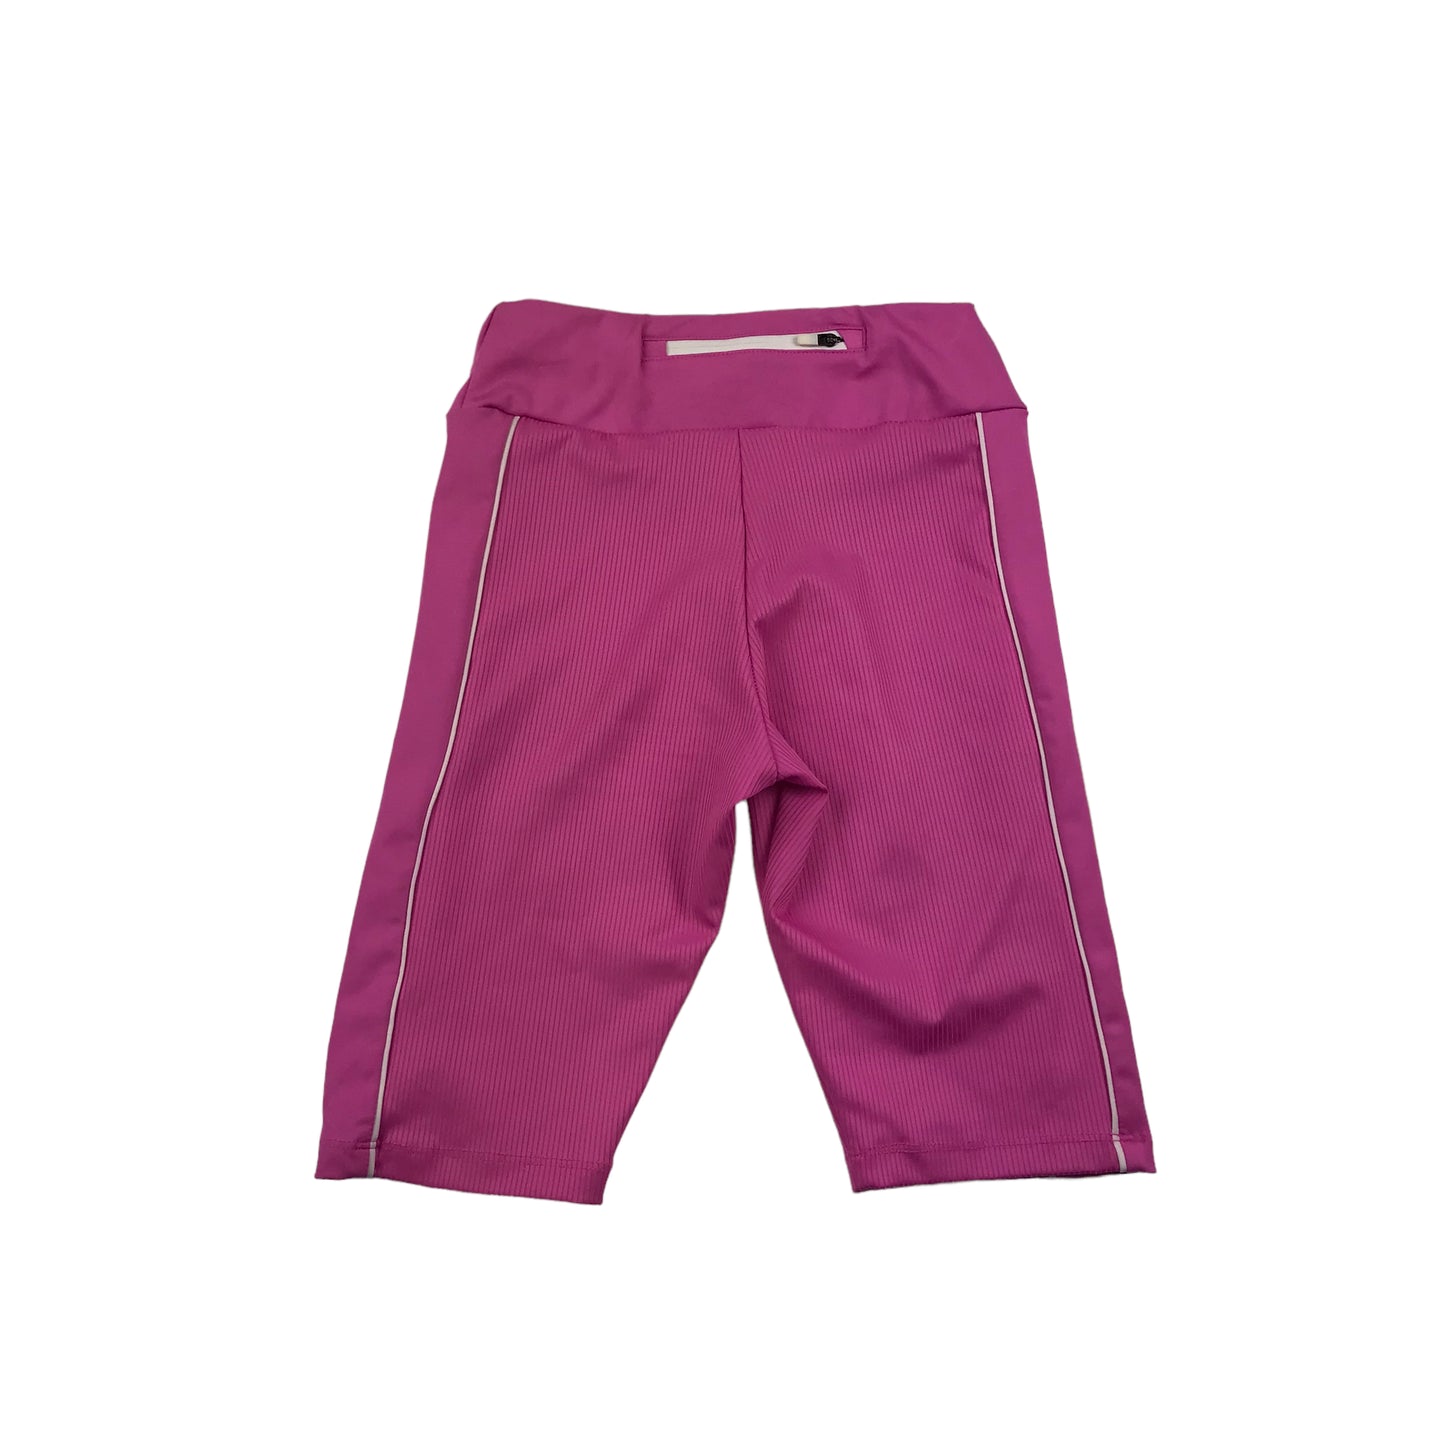 Zara Pink Shorts Style Sports Leggings Age 11